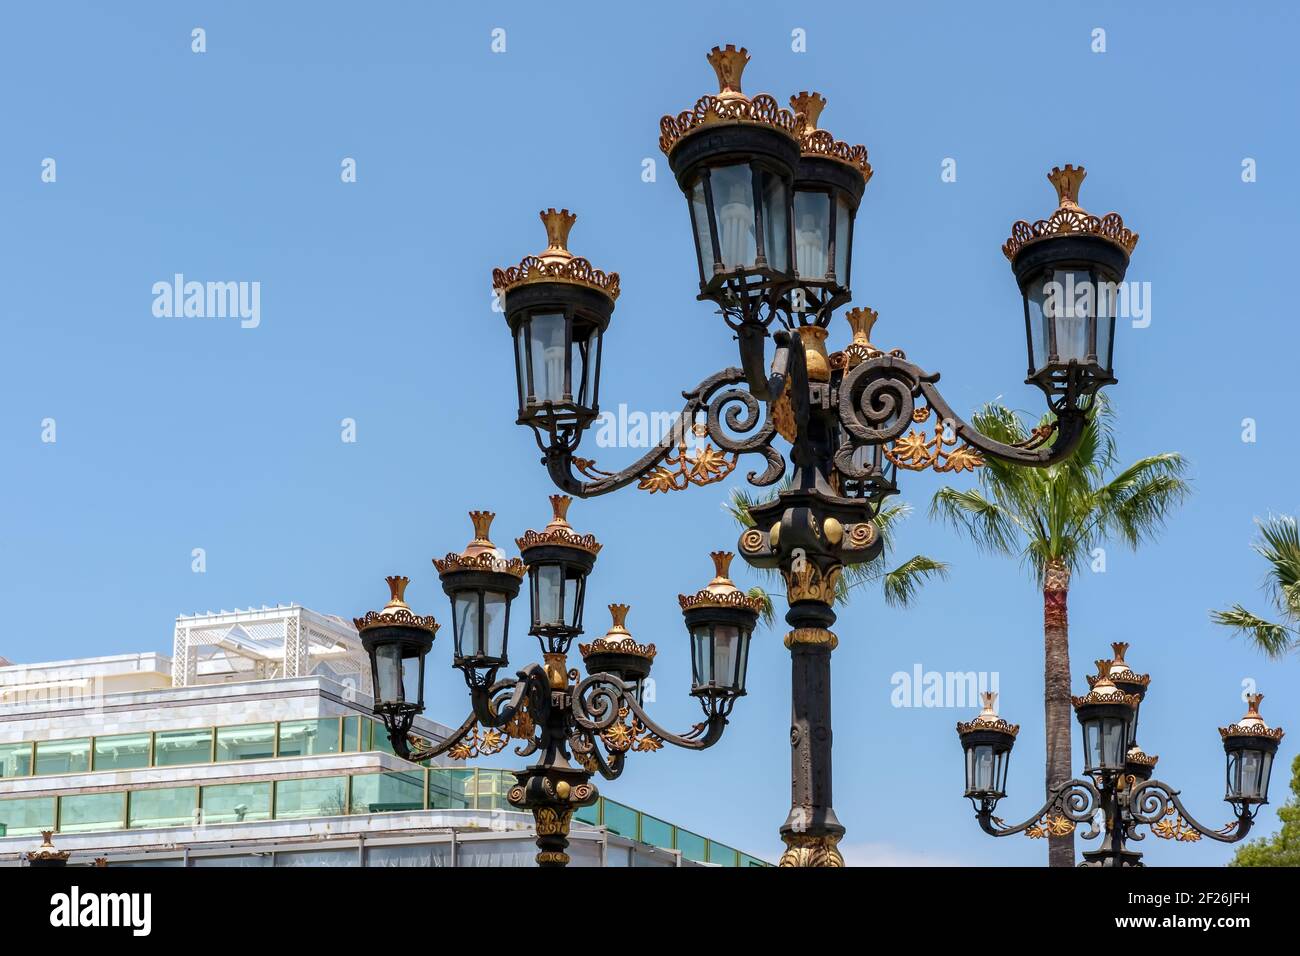 Ornate Street Lighting in Puerto Banus Stock Photo